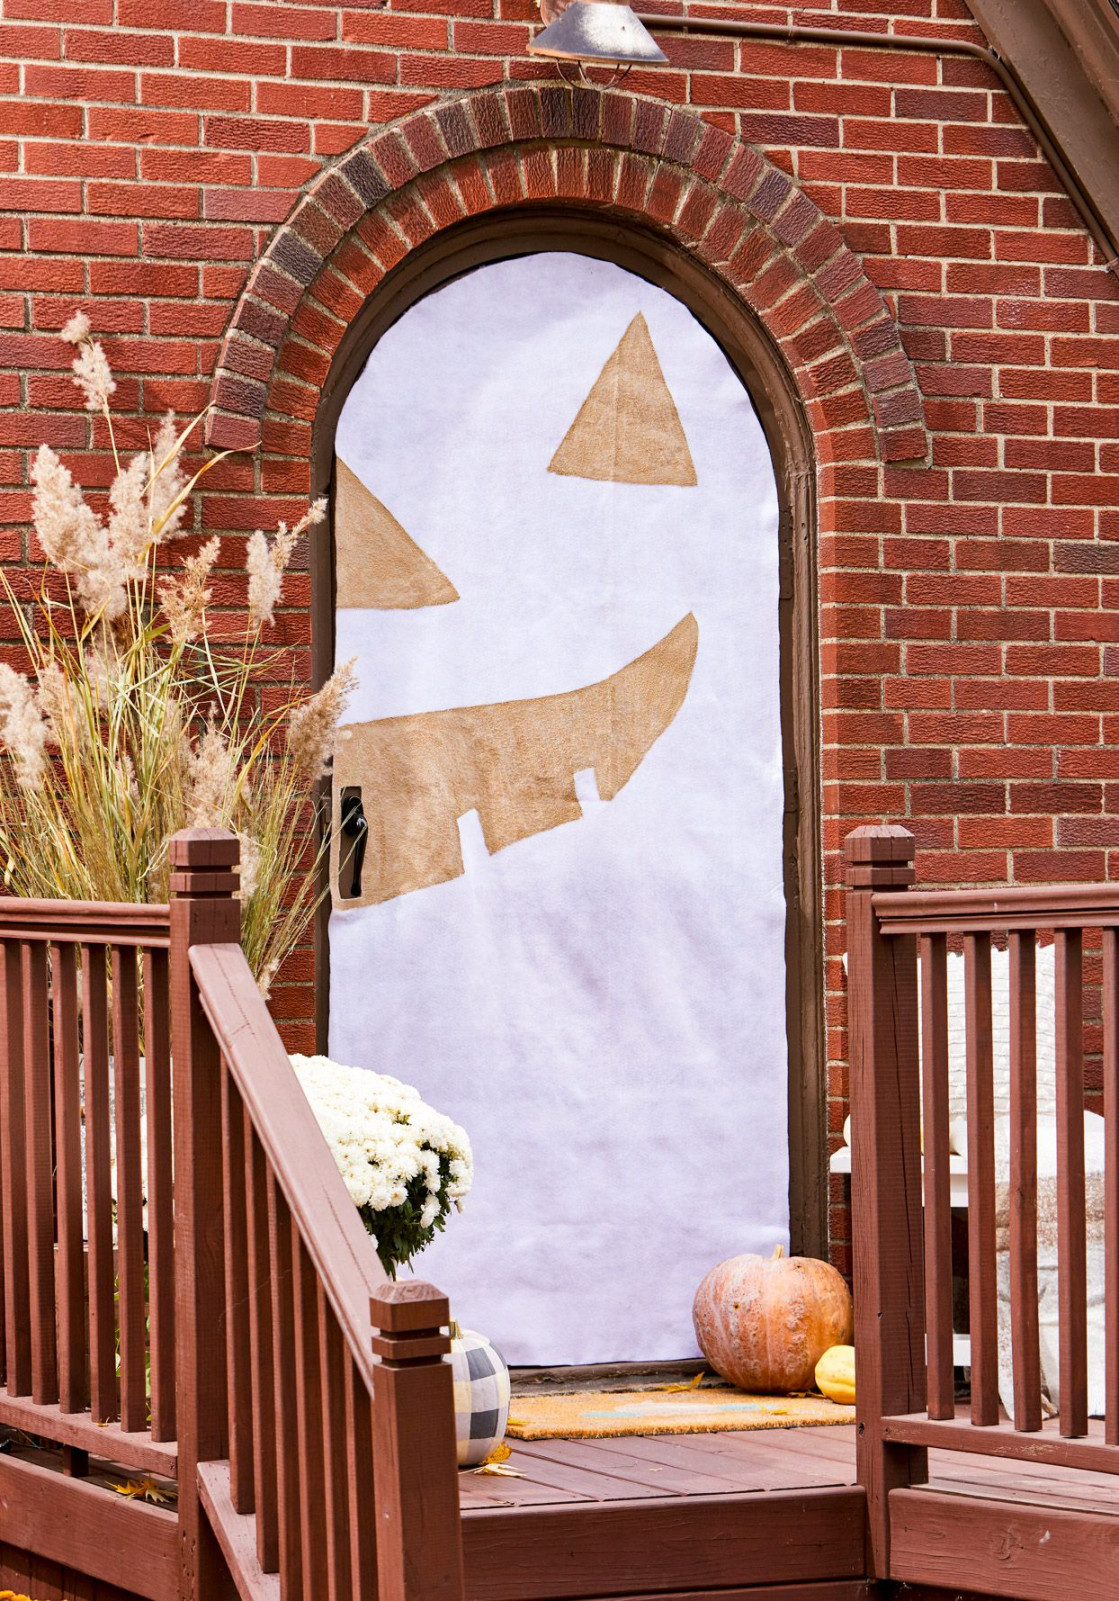 Spooky And Fun: Top Halloween Door Decor Ideas